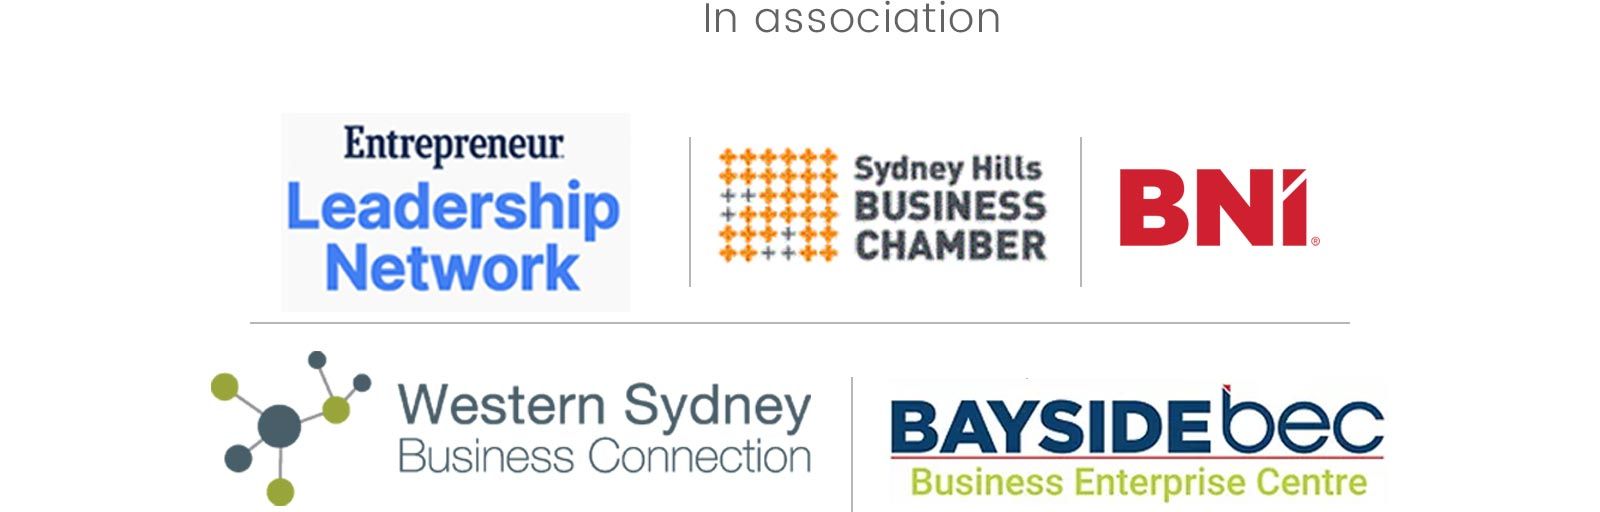 In Association with Entrepreneur.com logo, Sydney Hills Business Chamber logo, BNI logo, Western Sydney Business Connection logo, Bayside BEC logo